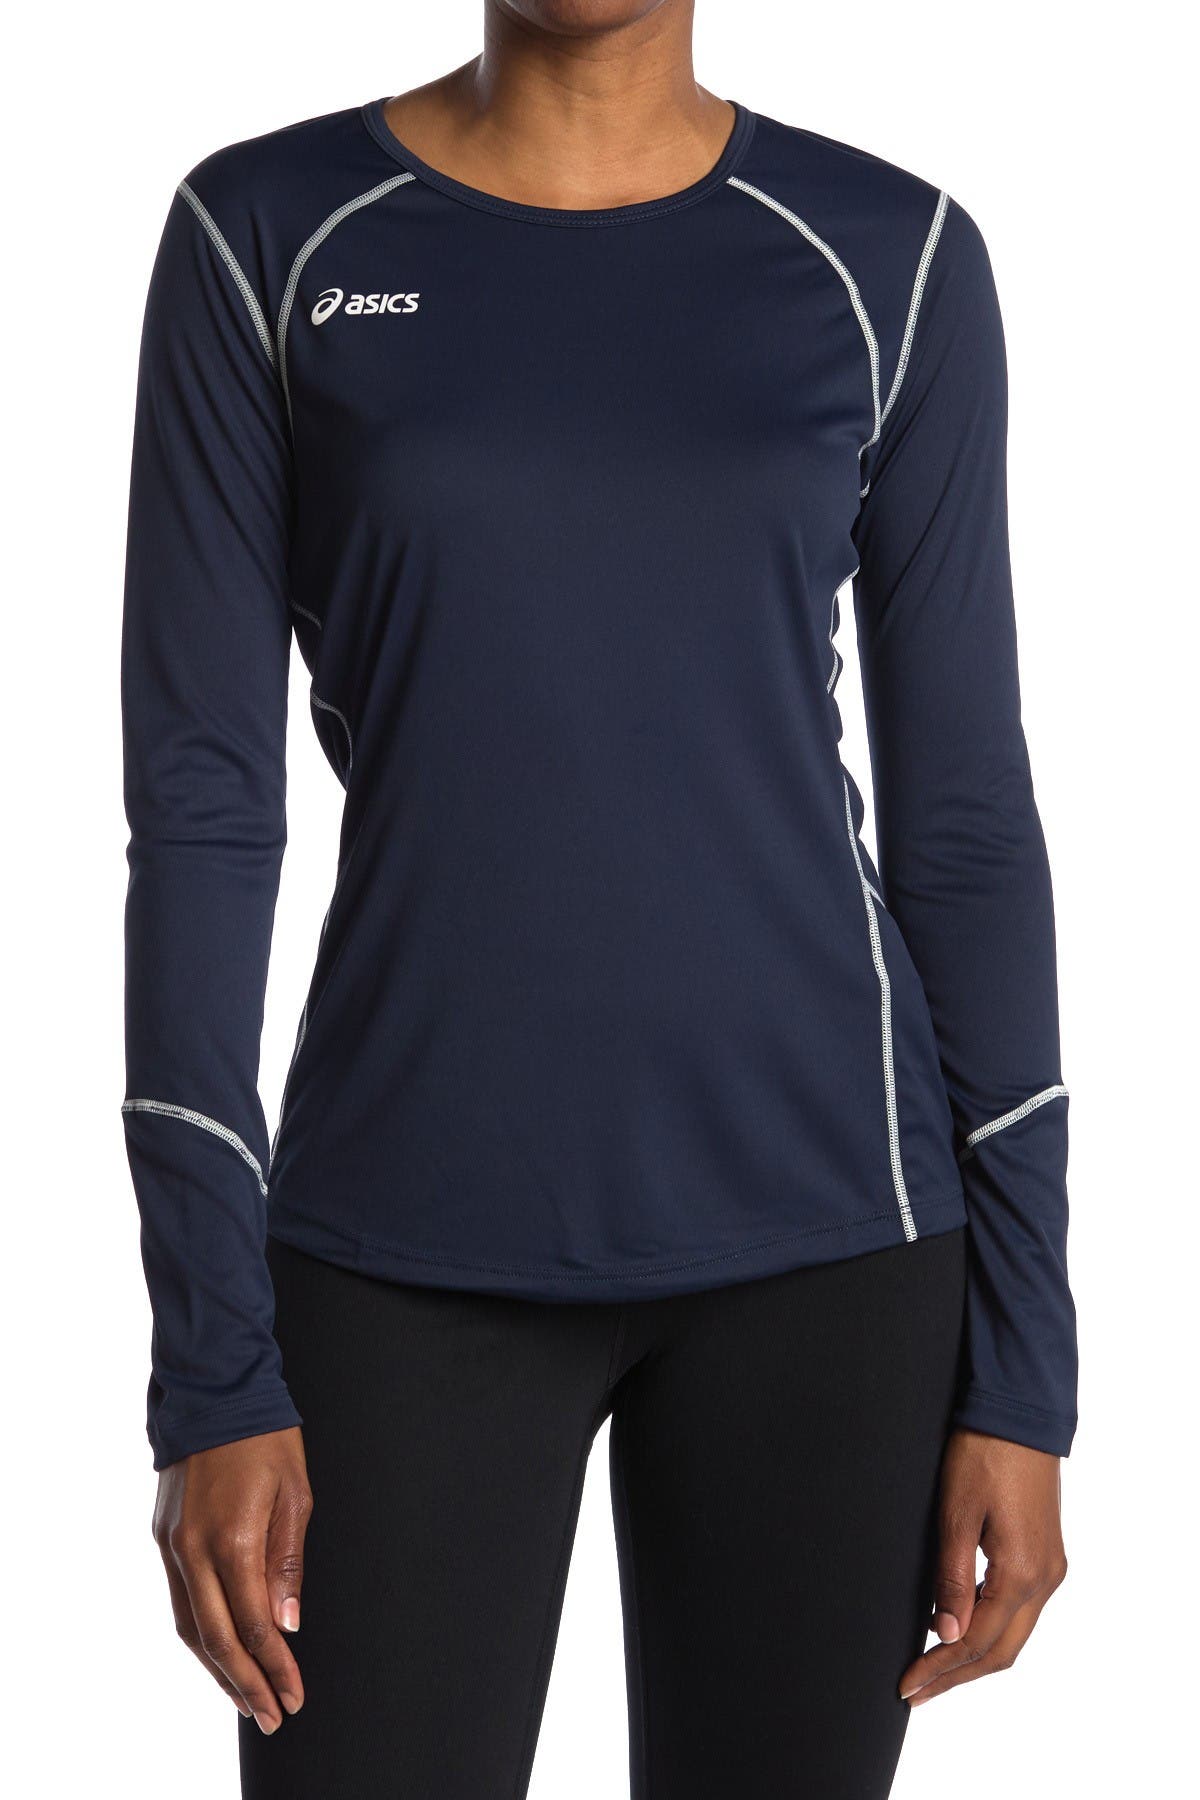 Asics Volleycross Long Sleeve Jersey In Navy